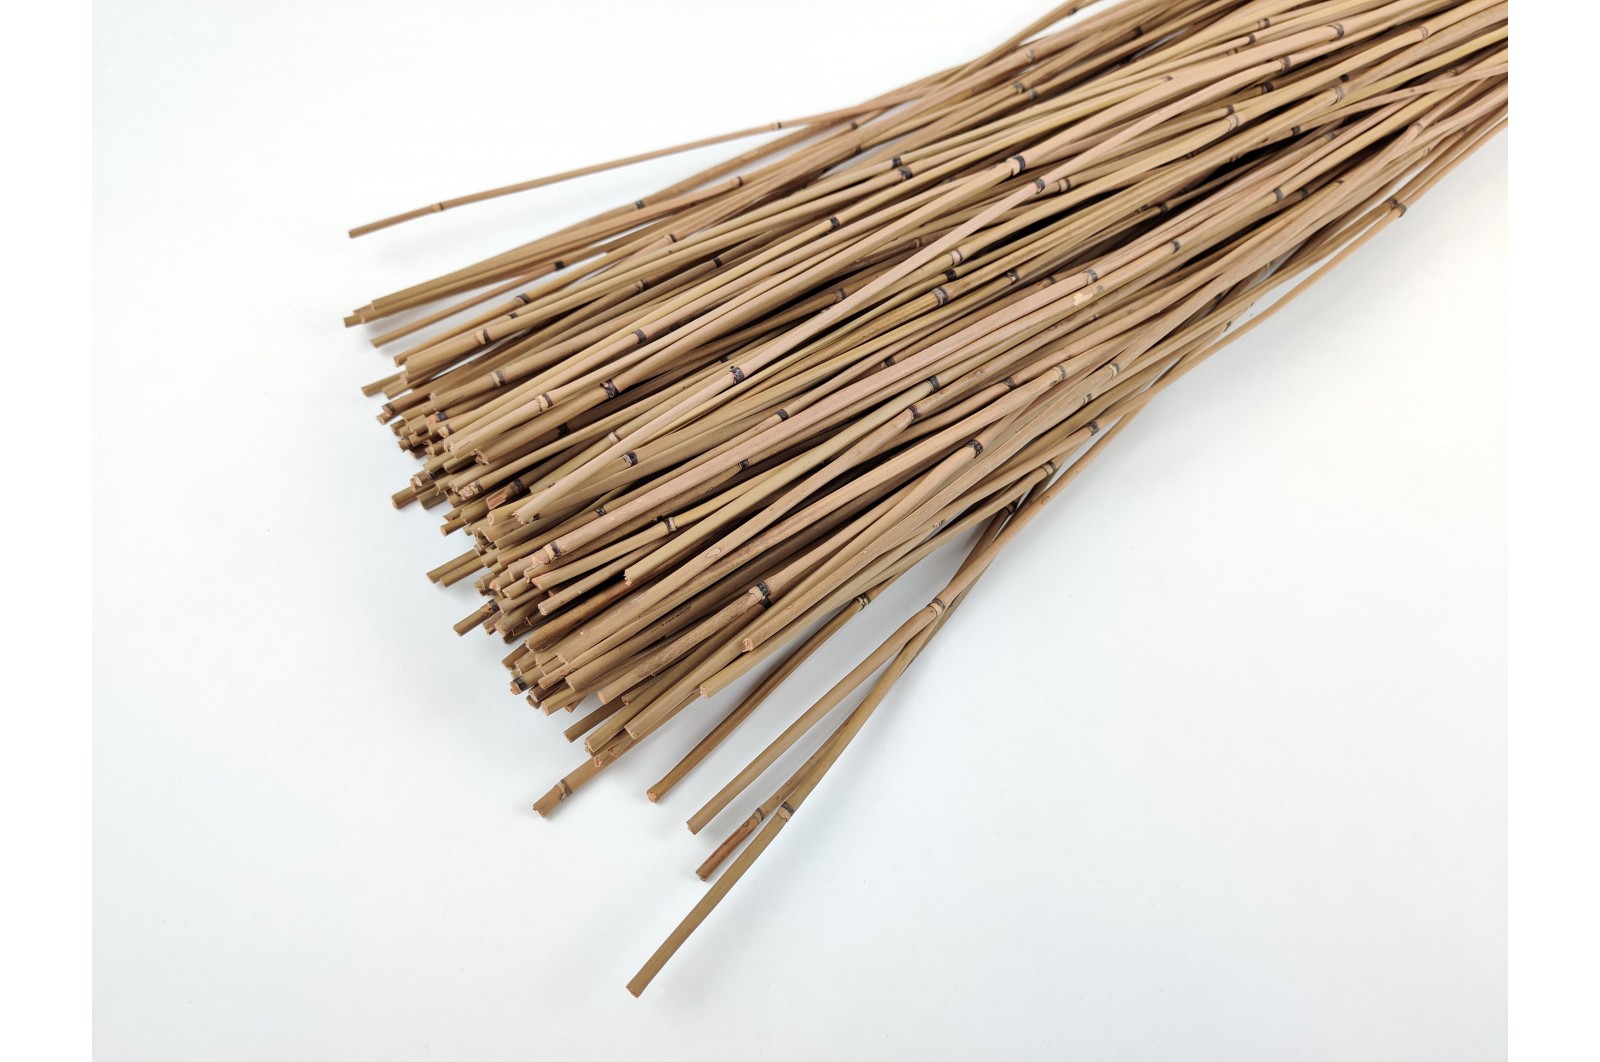 mini-bambou-sec-naturel-12